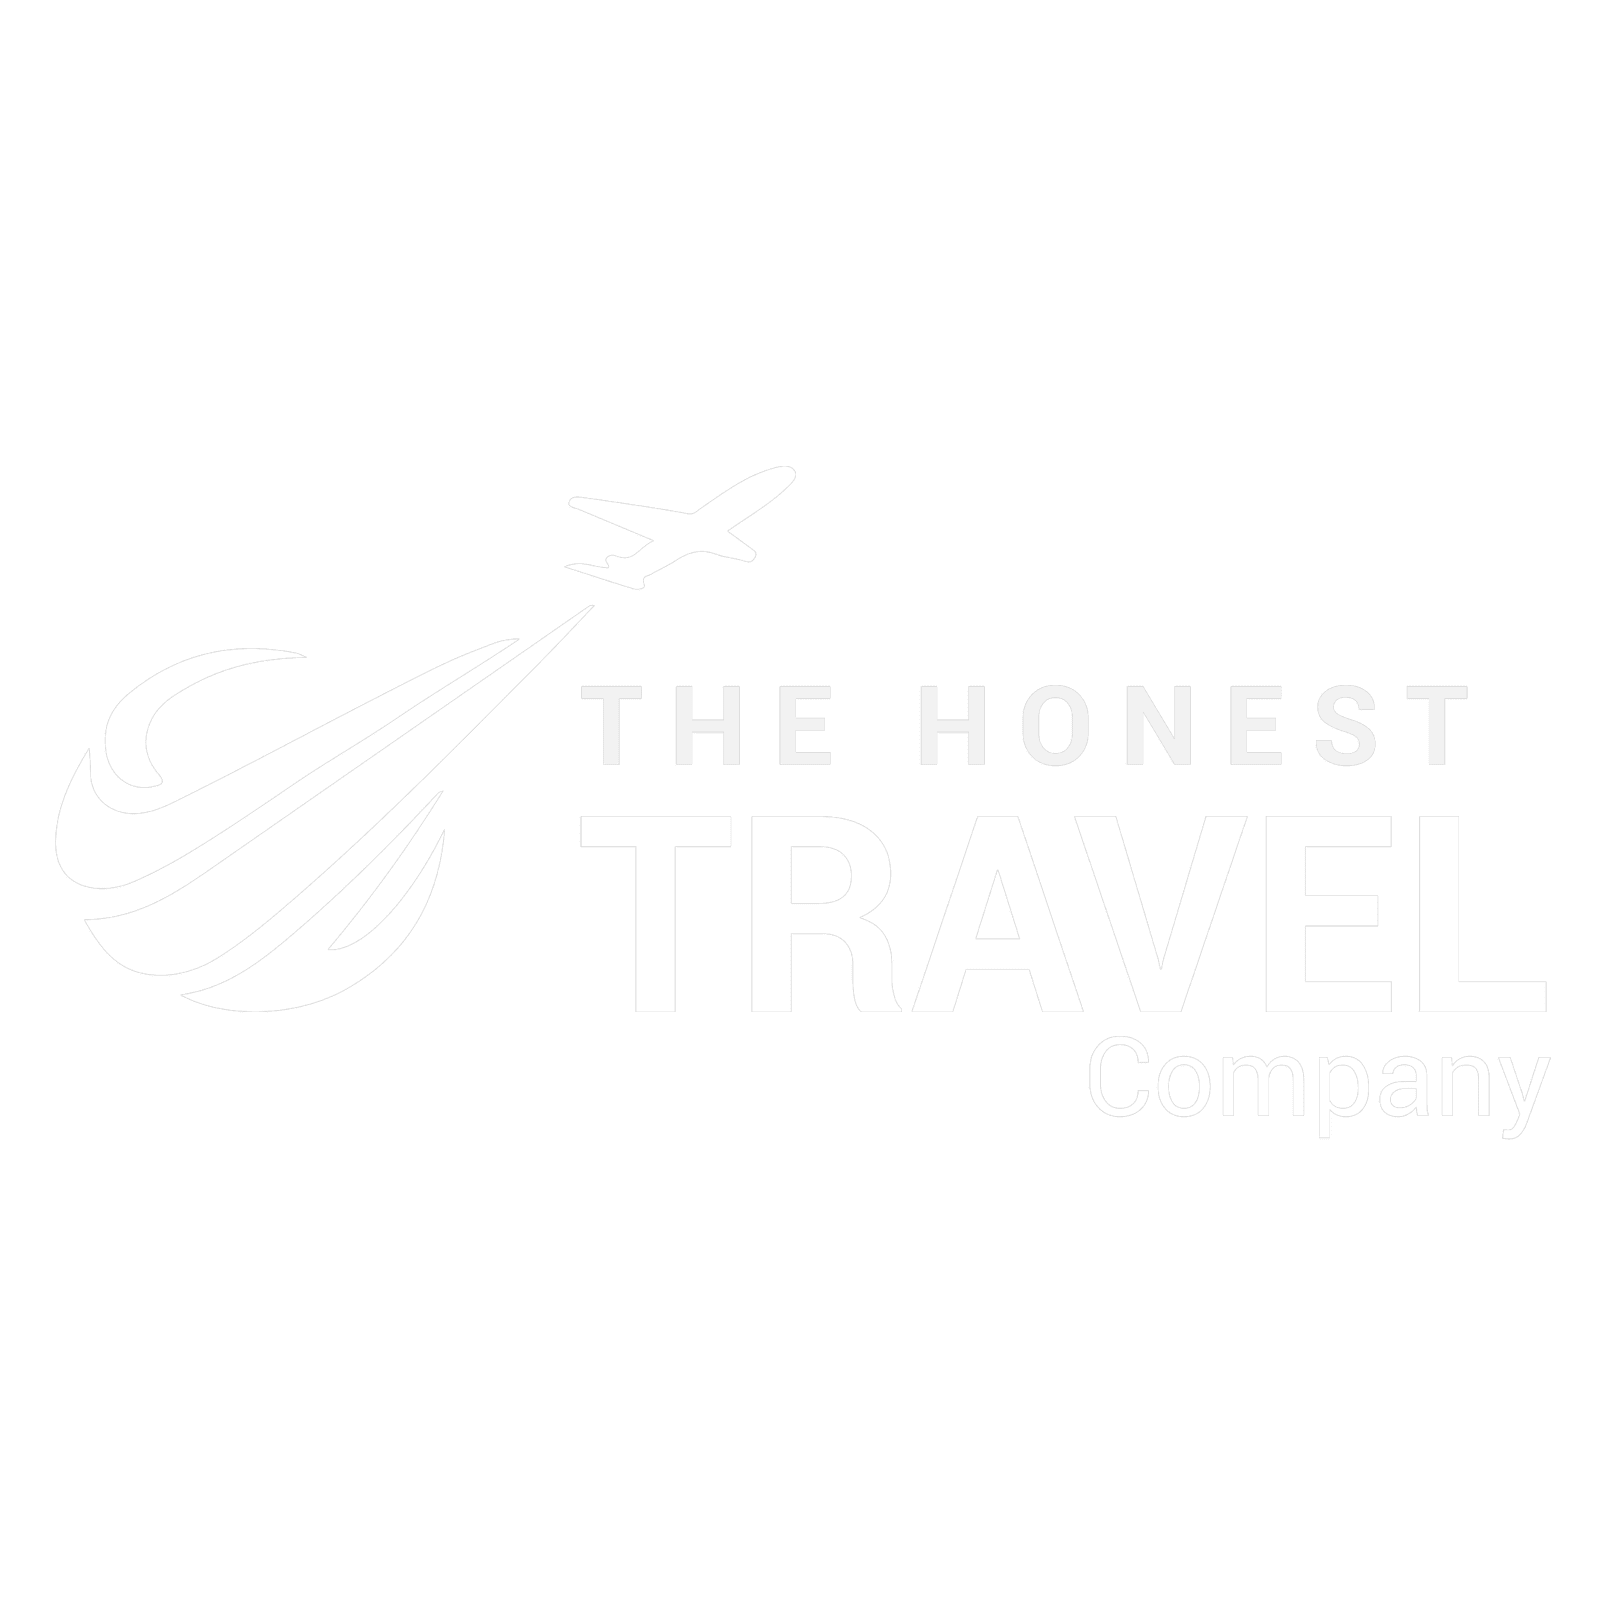 The Honest Travel Company